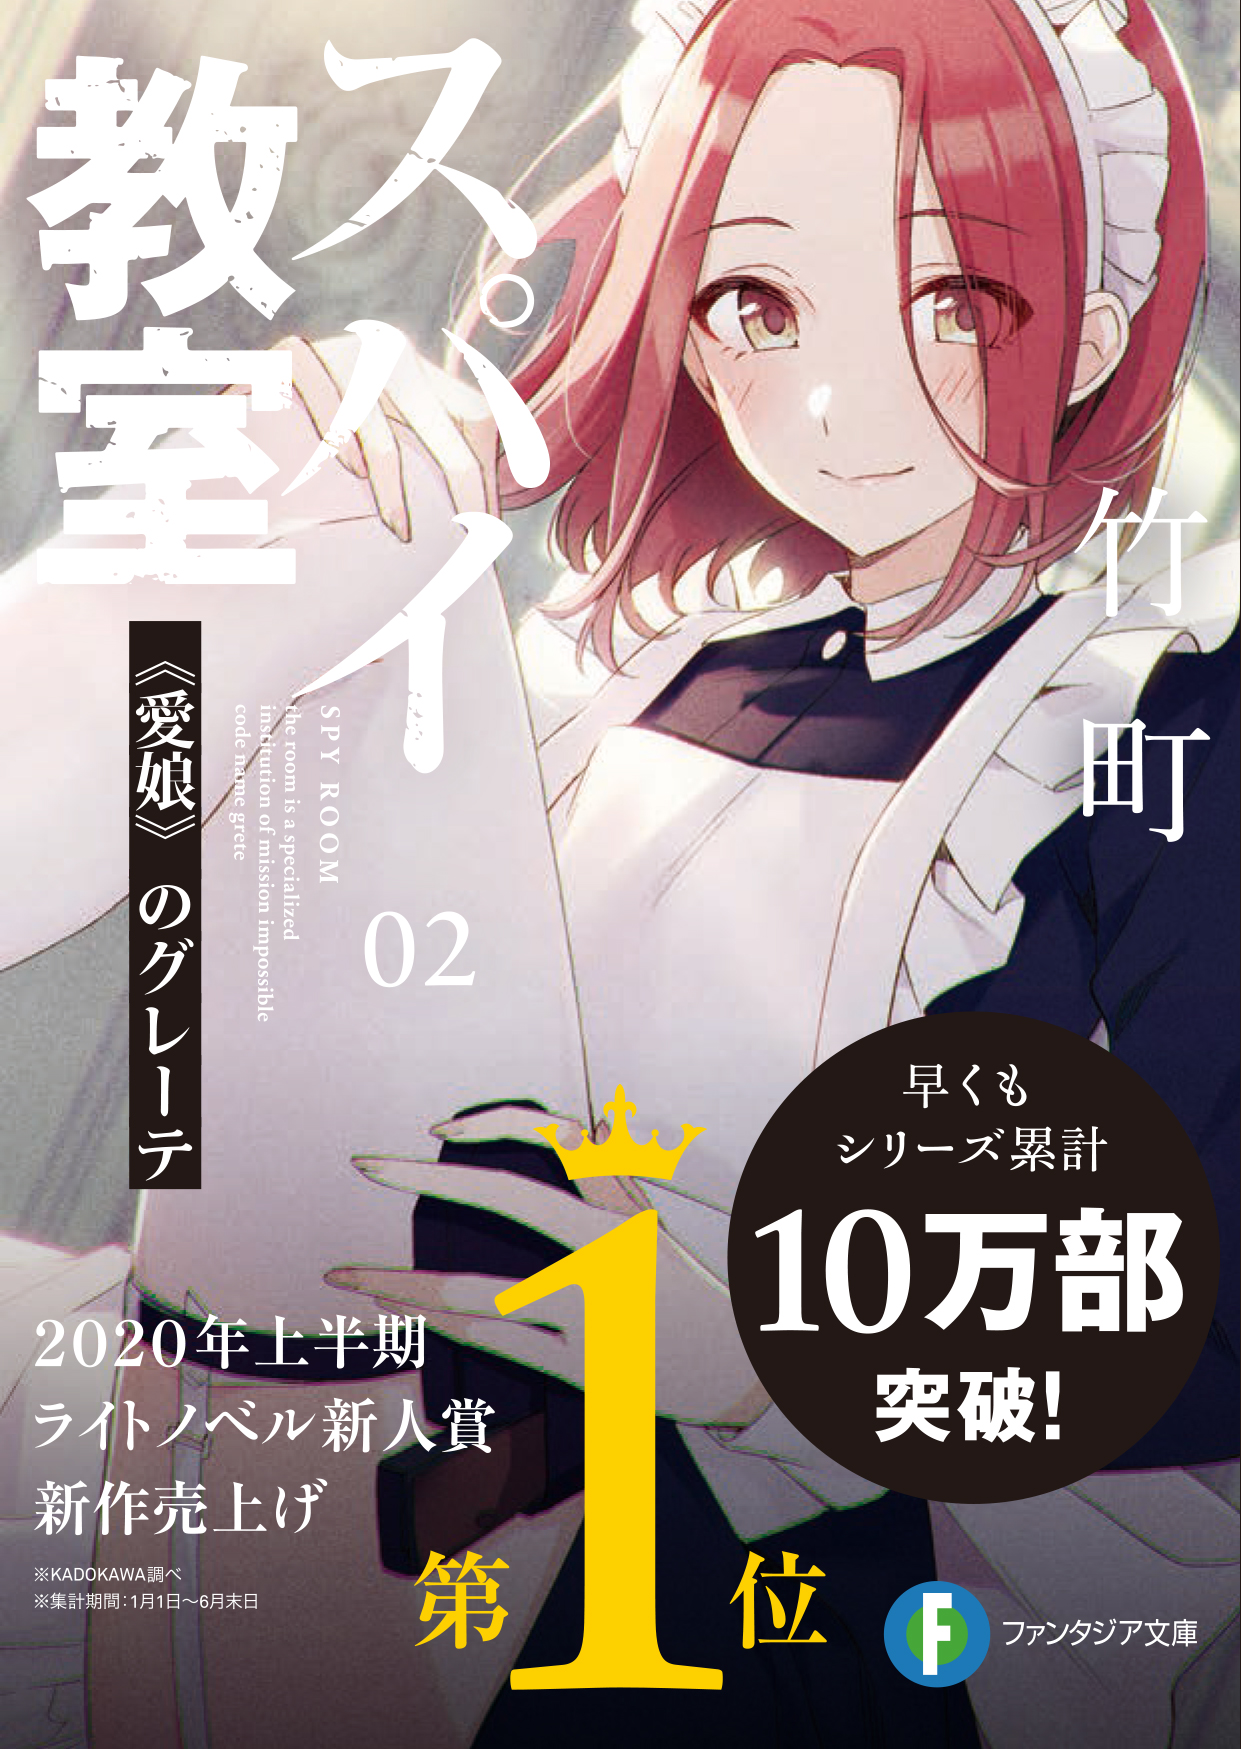 Spy Classroom (light novel) Volume 4 (Spy Kyoushitsu) - Manga Store 